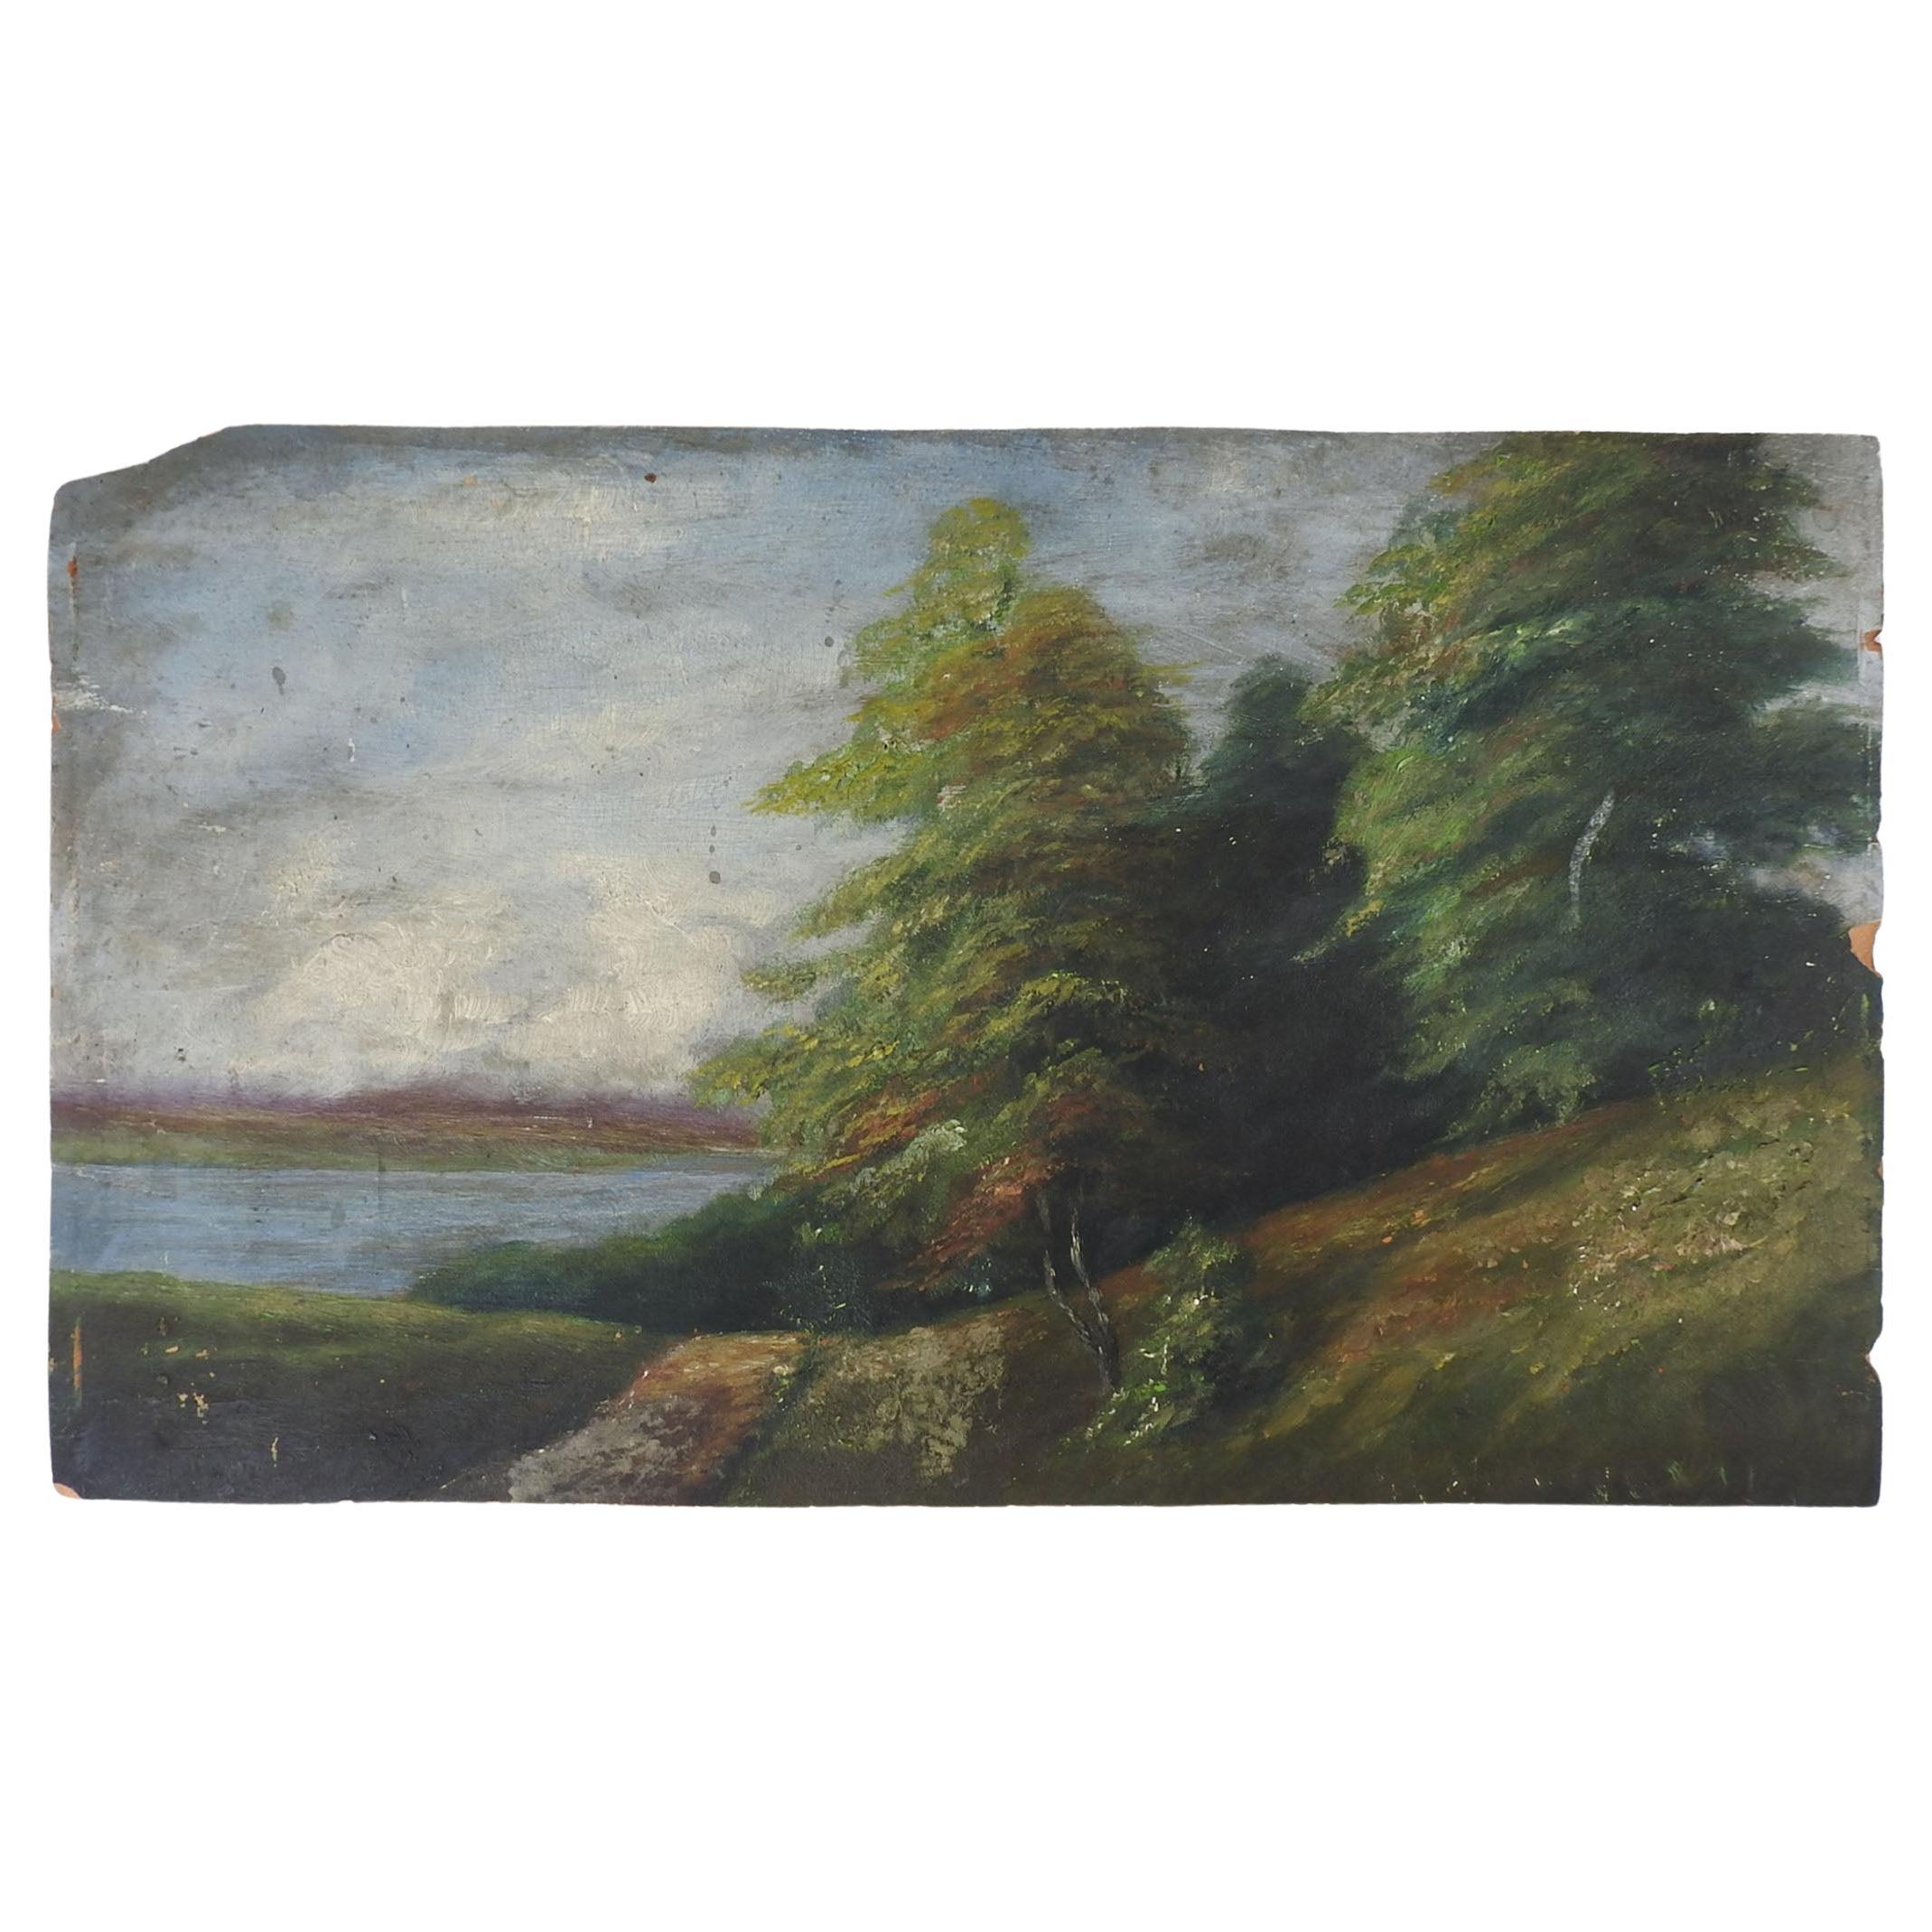 Antique Distressed European River & Forest Landscape Painting